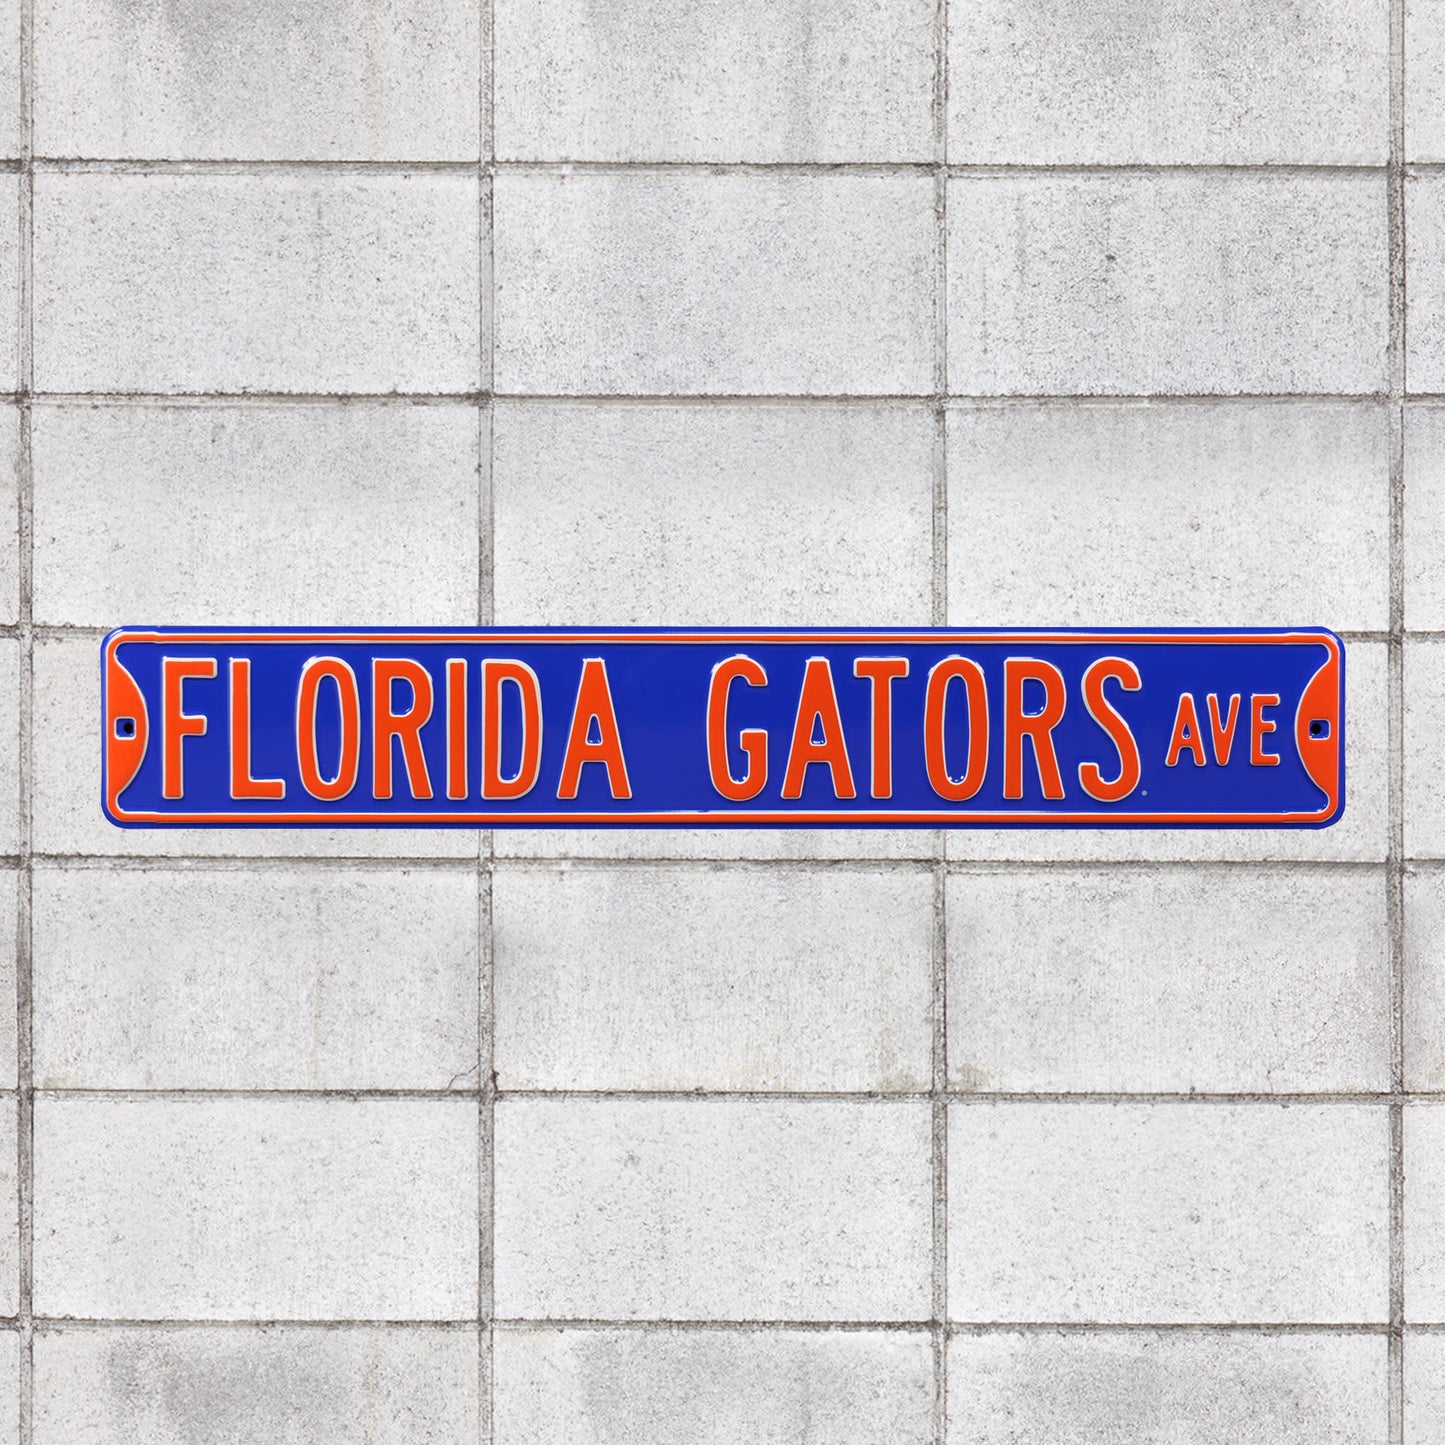 Florida Gators: Florida Gators Avenue (Blue) - Officially Licensed Metal Street Sign